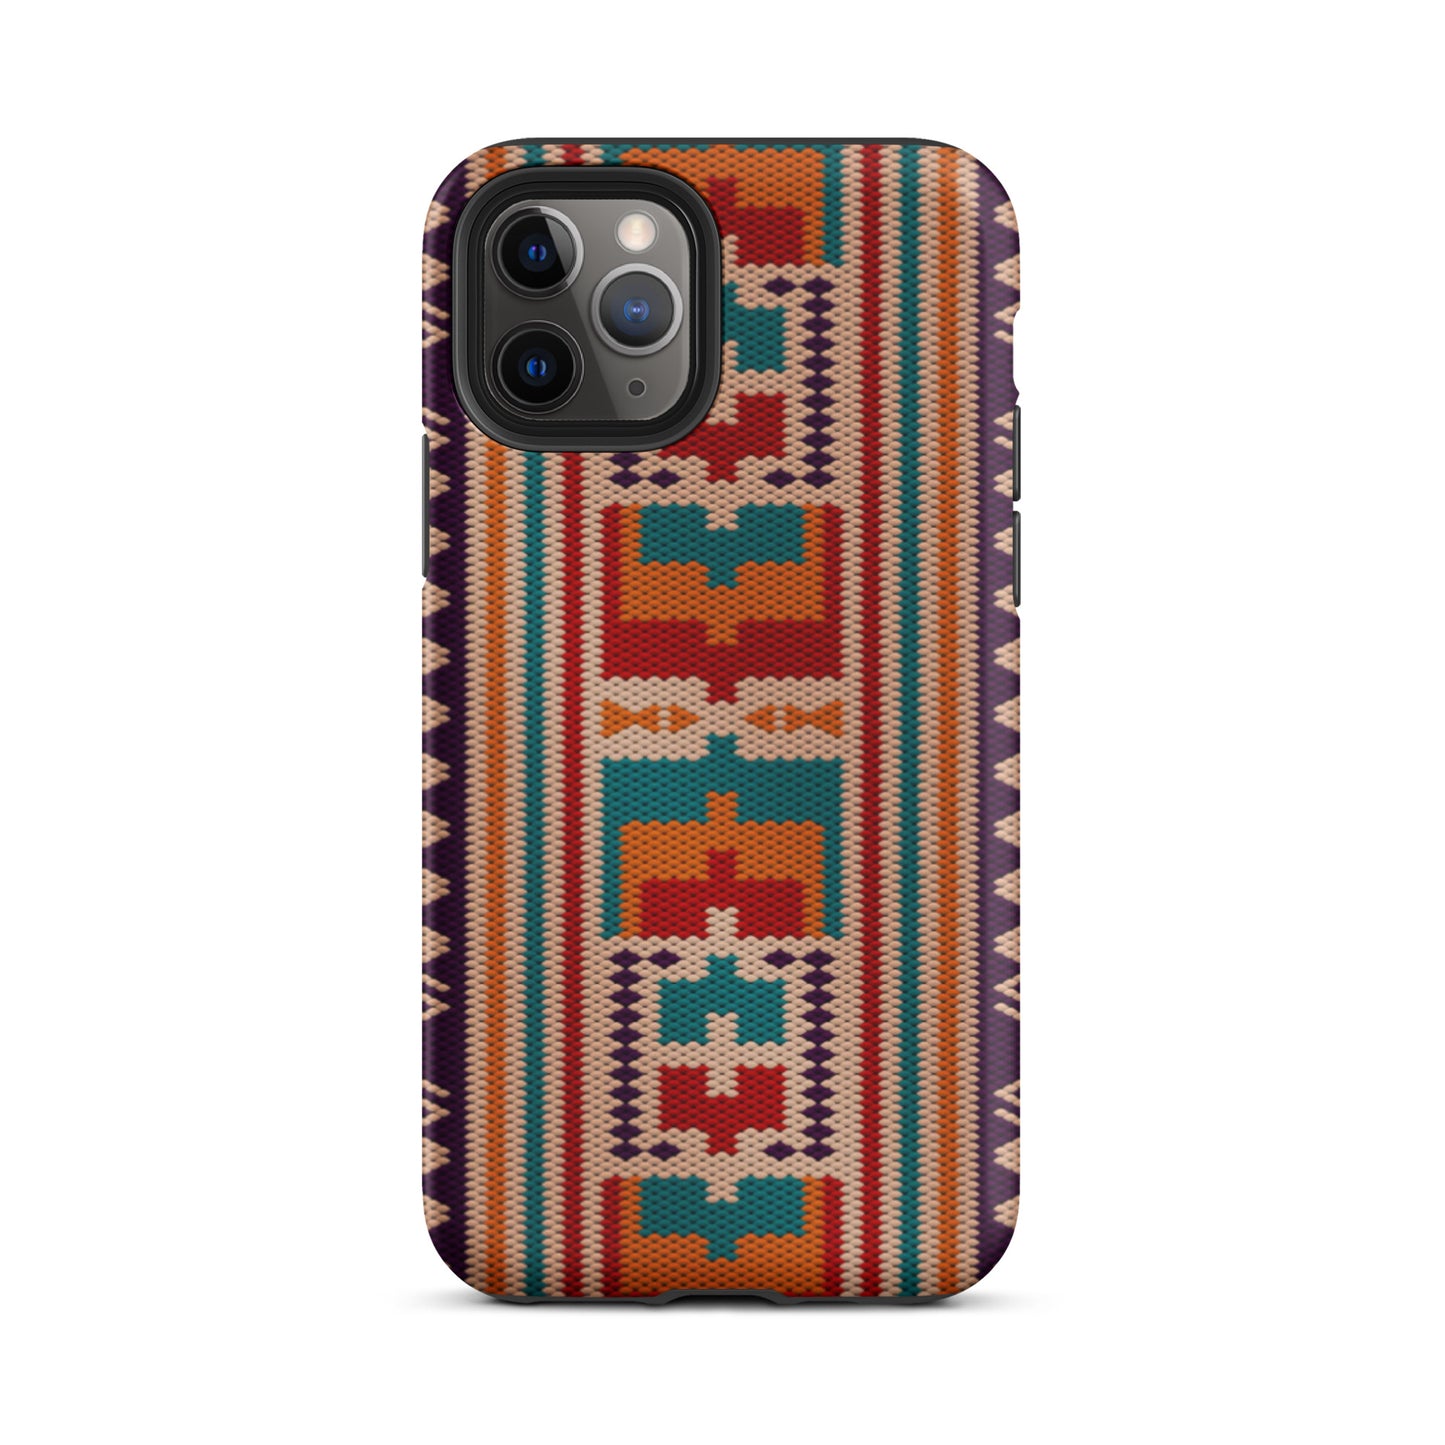 Navajo Tough iPhone 11 Pro case